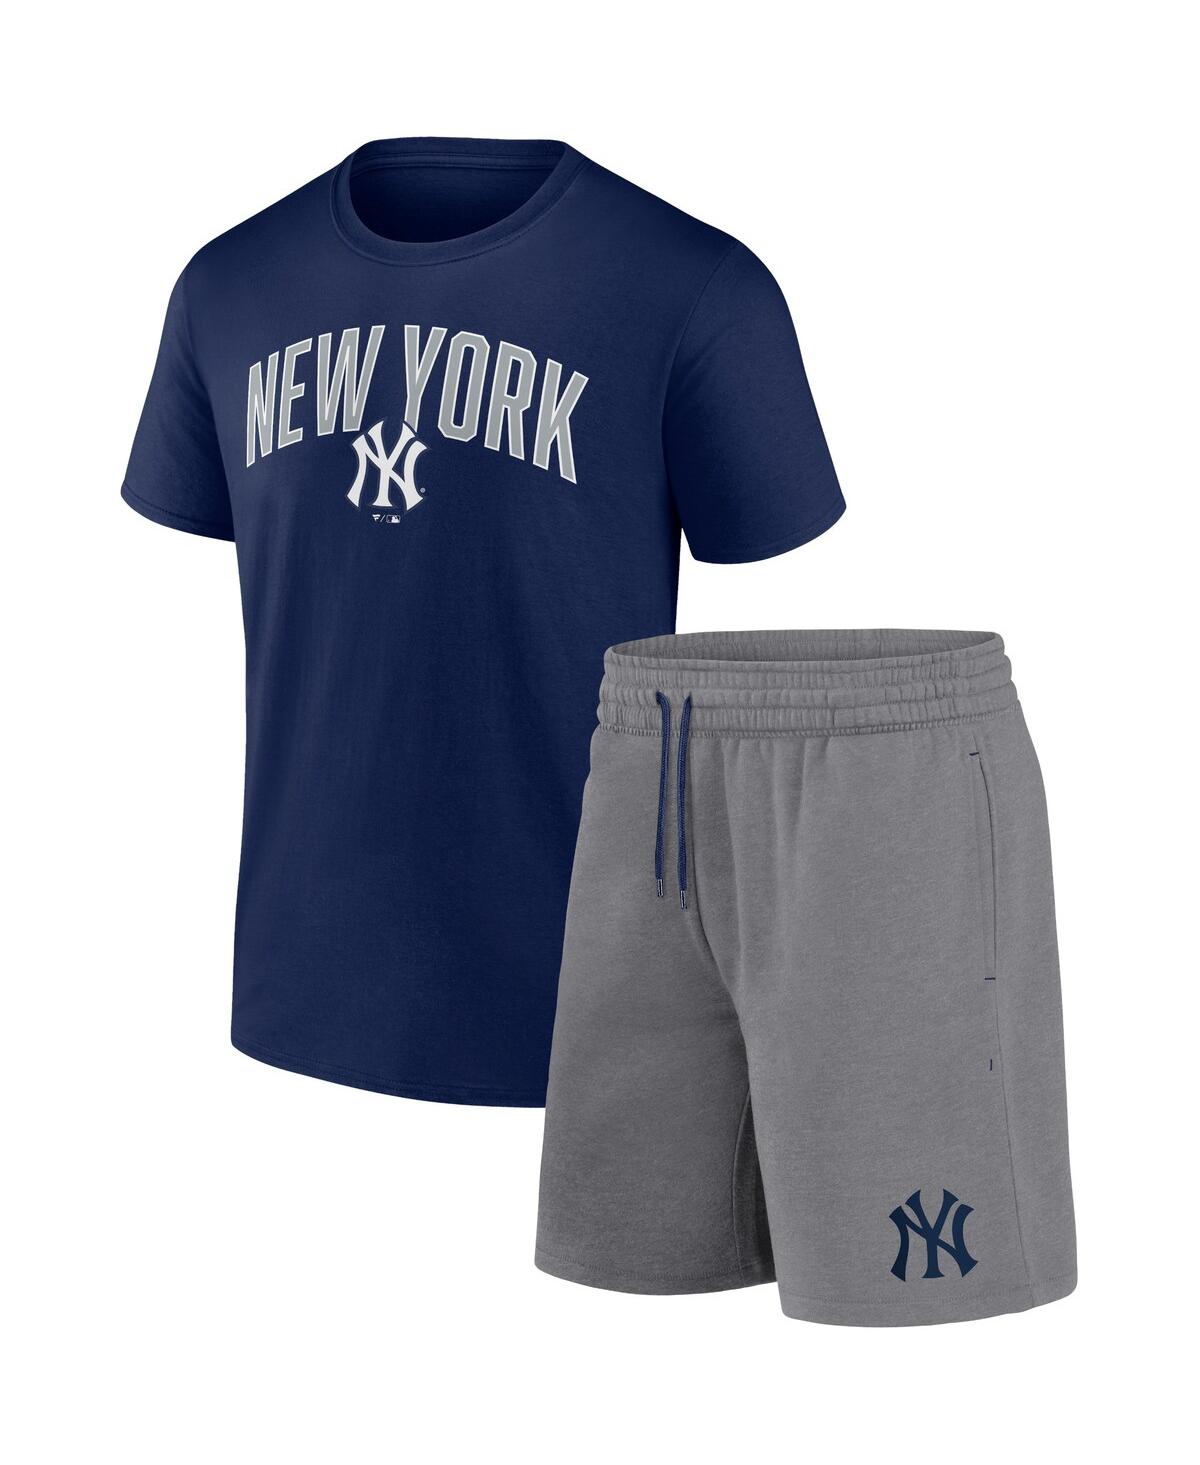 Men's New York Mets Fanatics Branded Heathered Gray Weathered